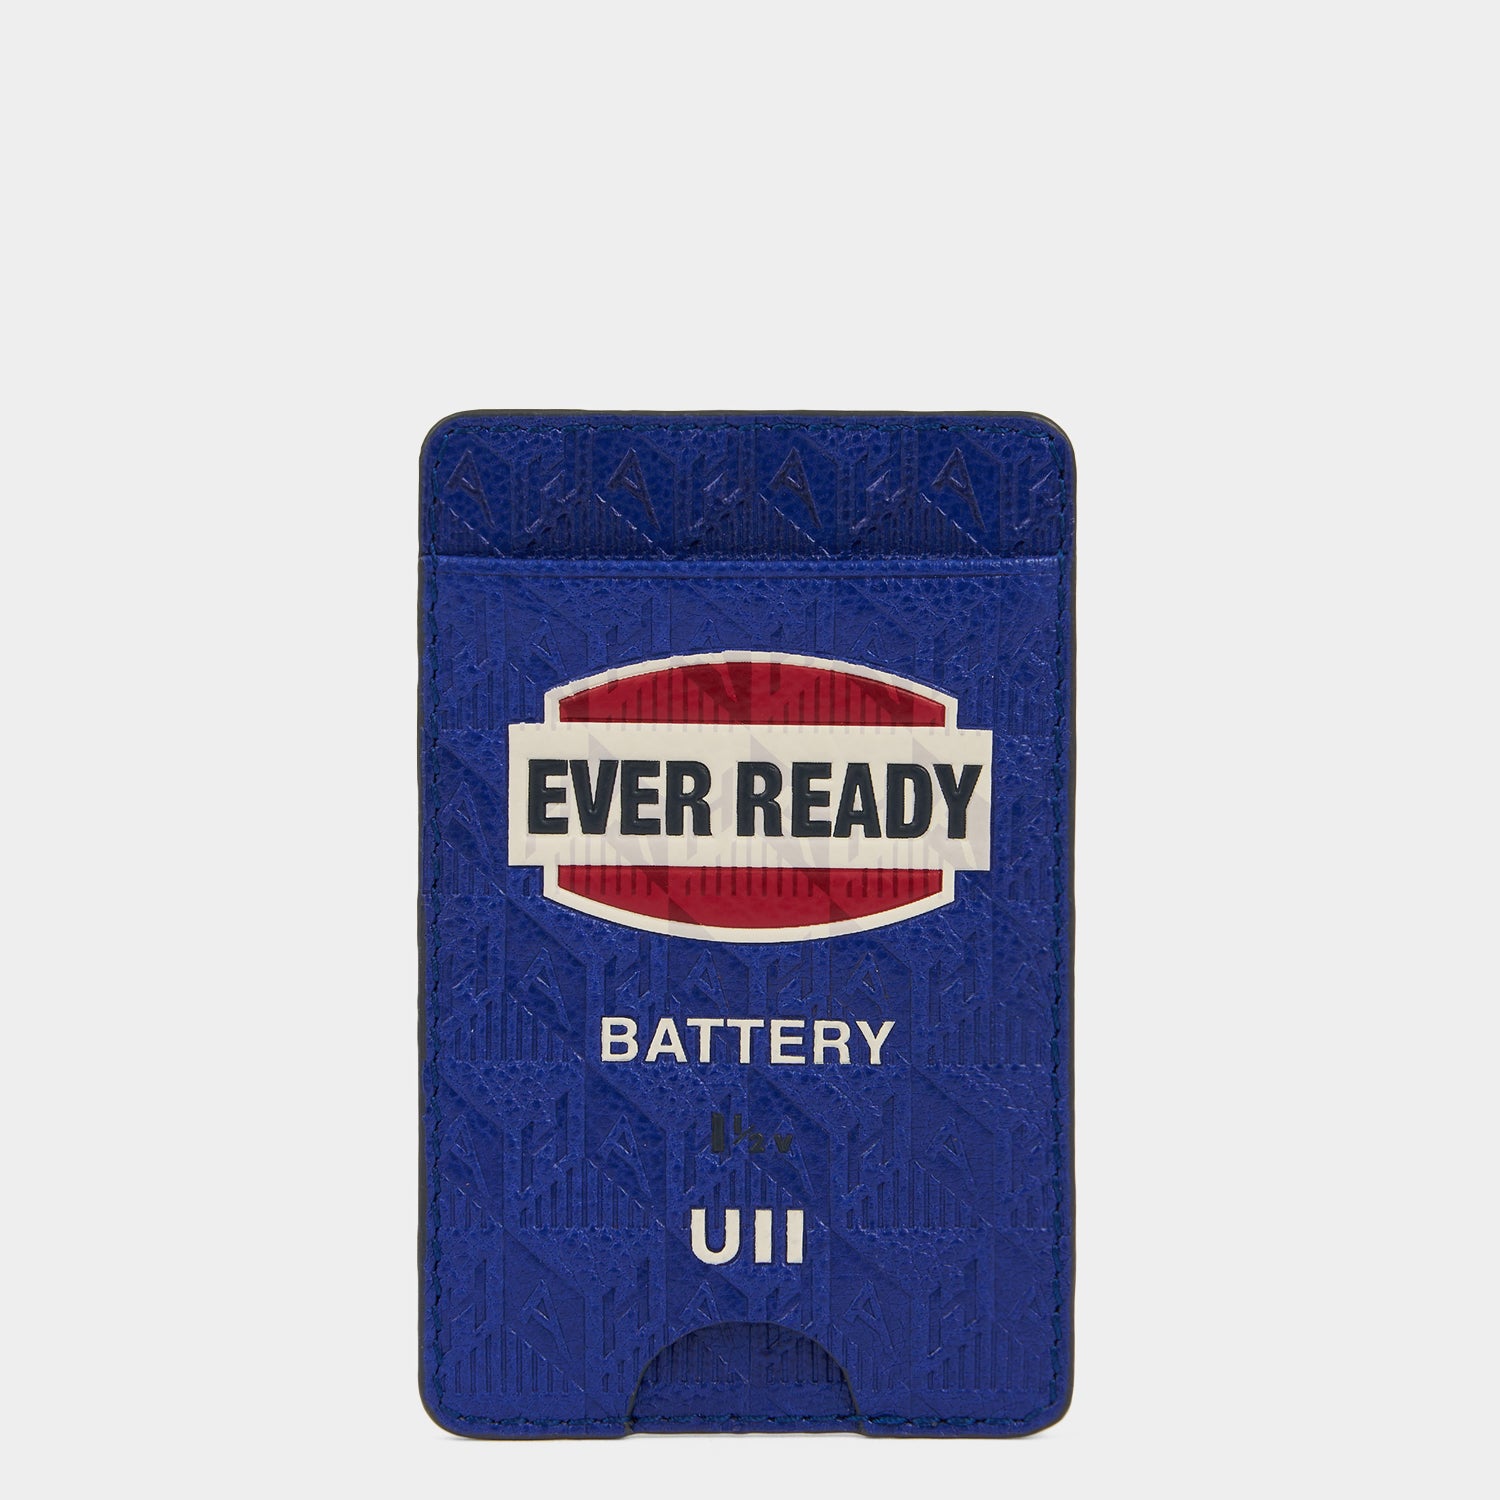 「EVER READY」カードケース ステッカー